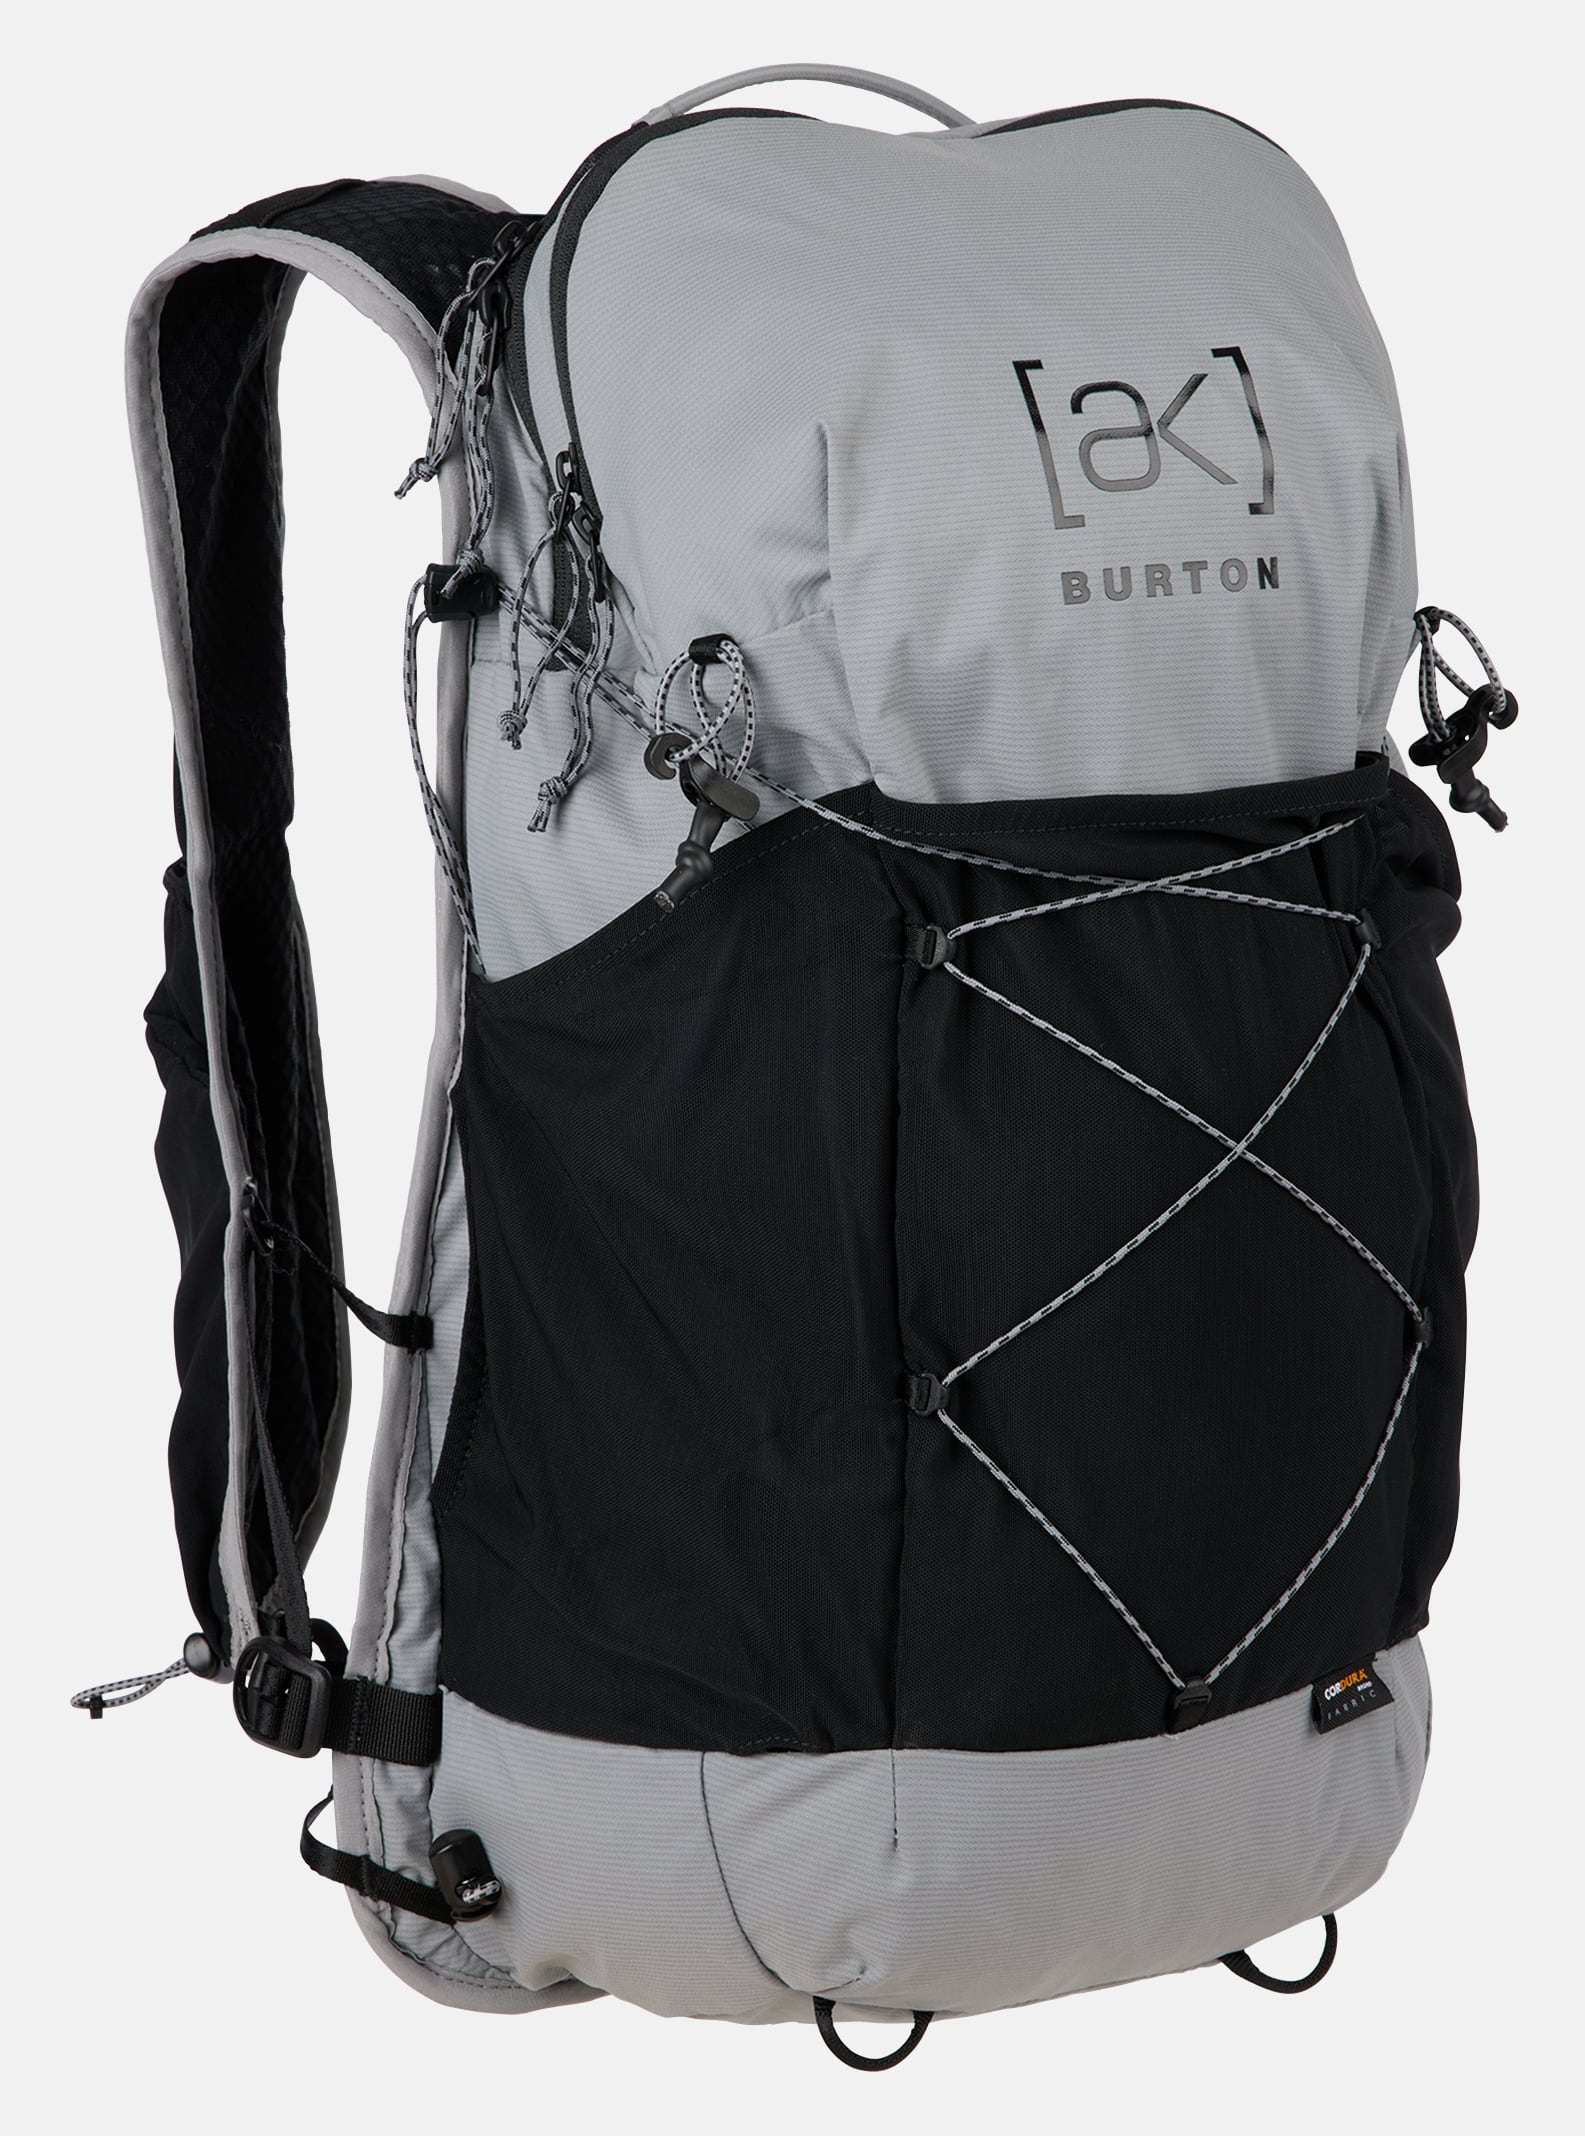 ak] Surgence 20L Backpack | Burton.com Winter 2023 US